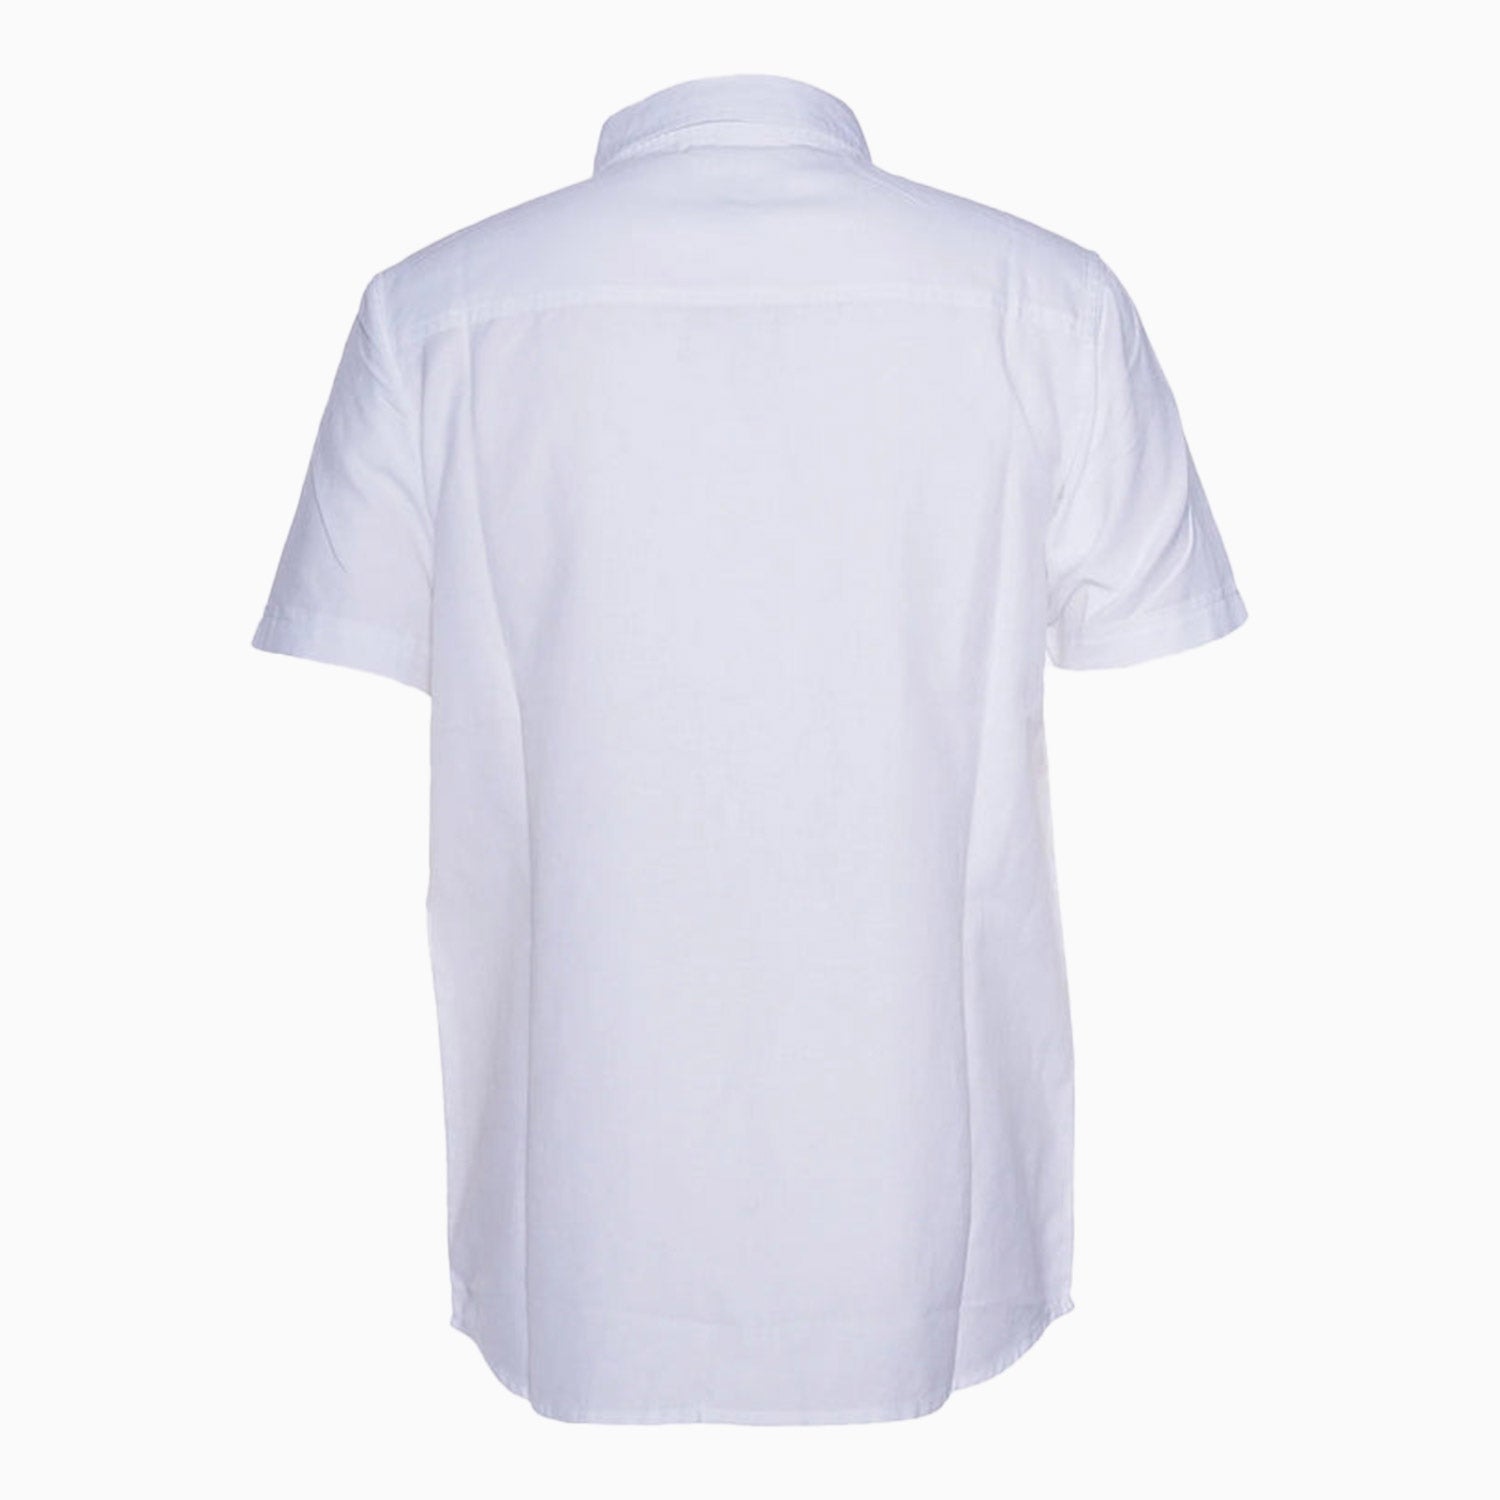 a-tiziano-mens-arbor-short-sleeve-t-shirt-32atm3204-white-32atm1401-white